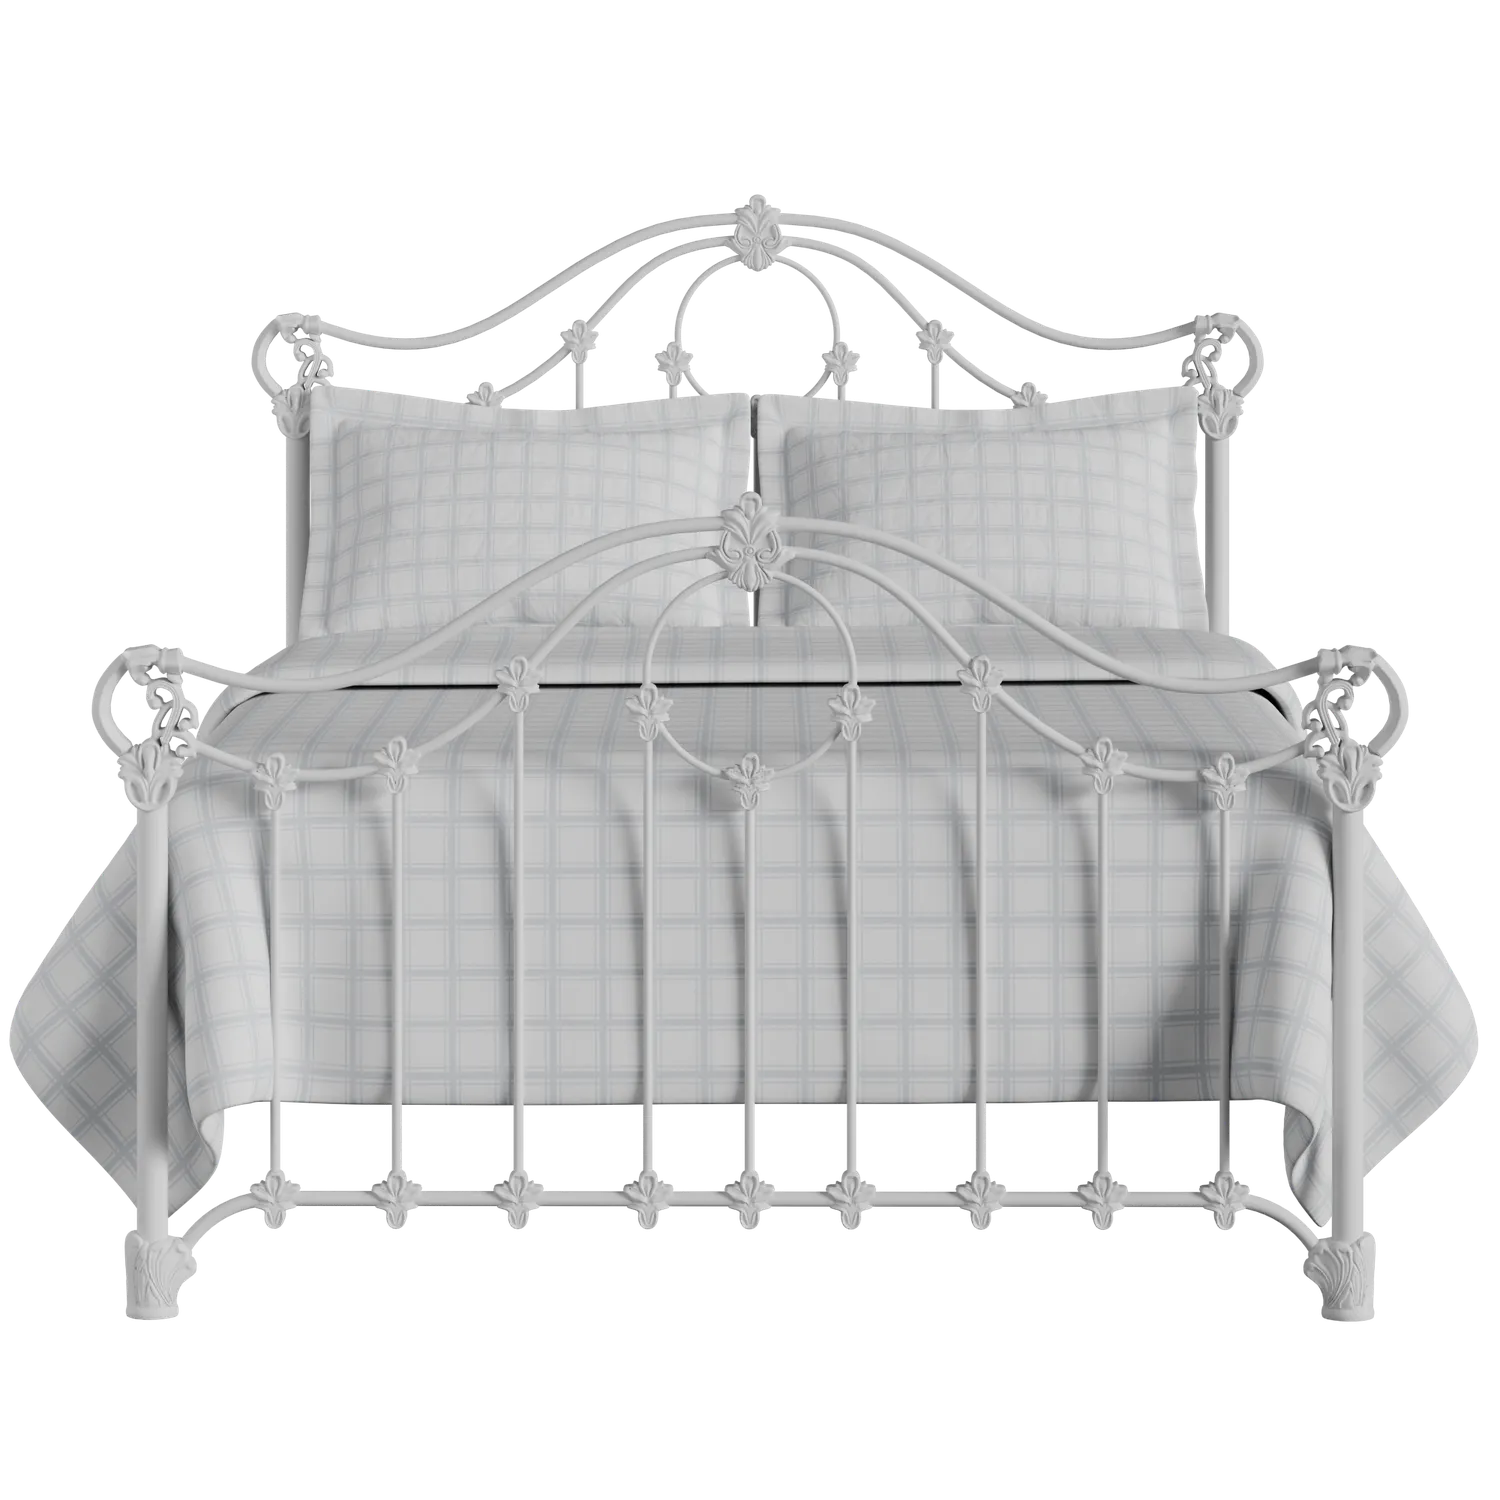 Alva iron/metal bed in white